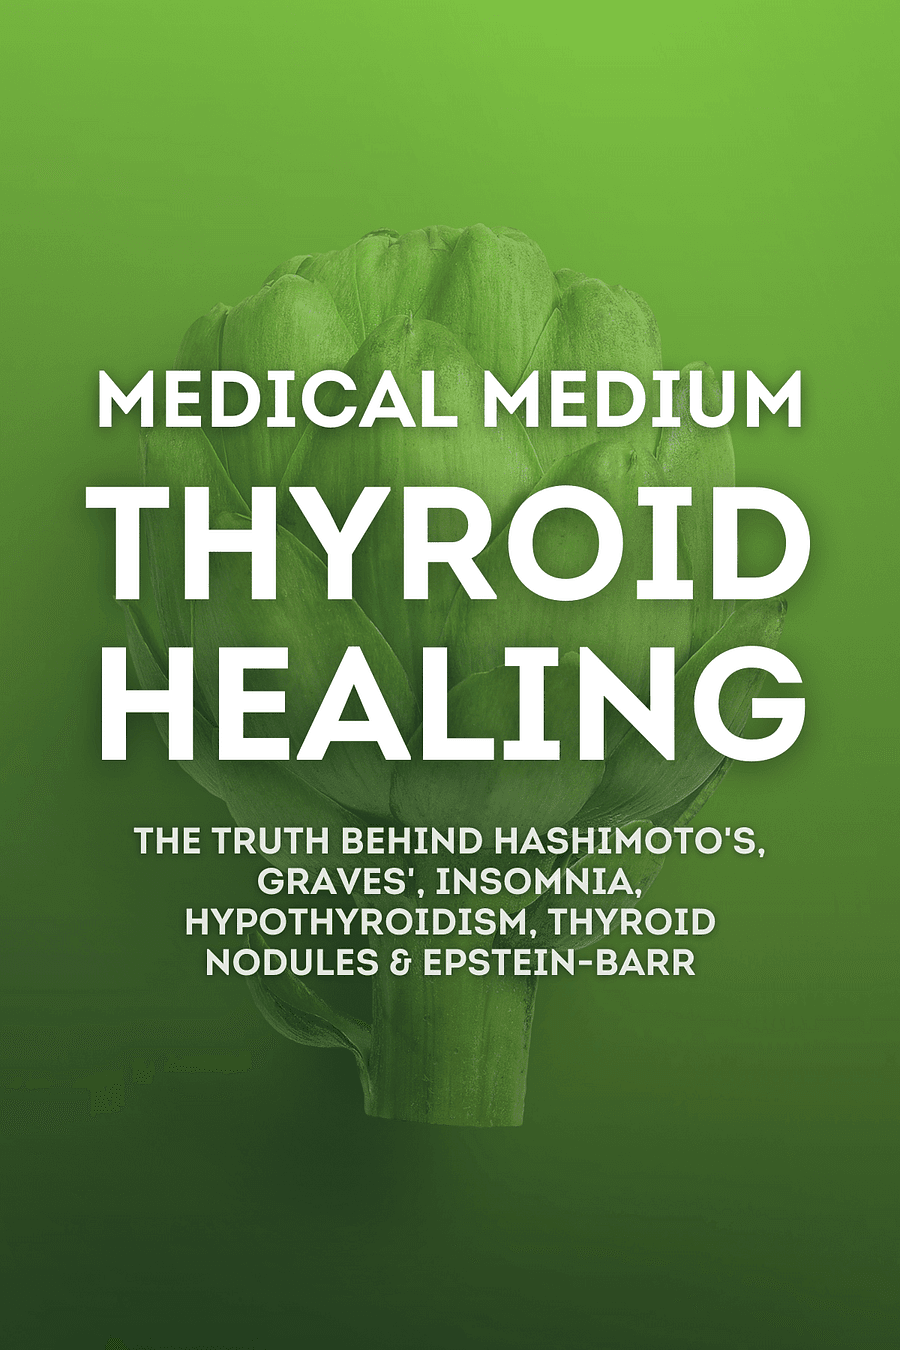 Medical Medium Thyroid Healing by Anthony William - Book Summary